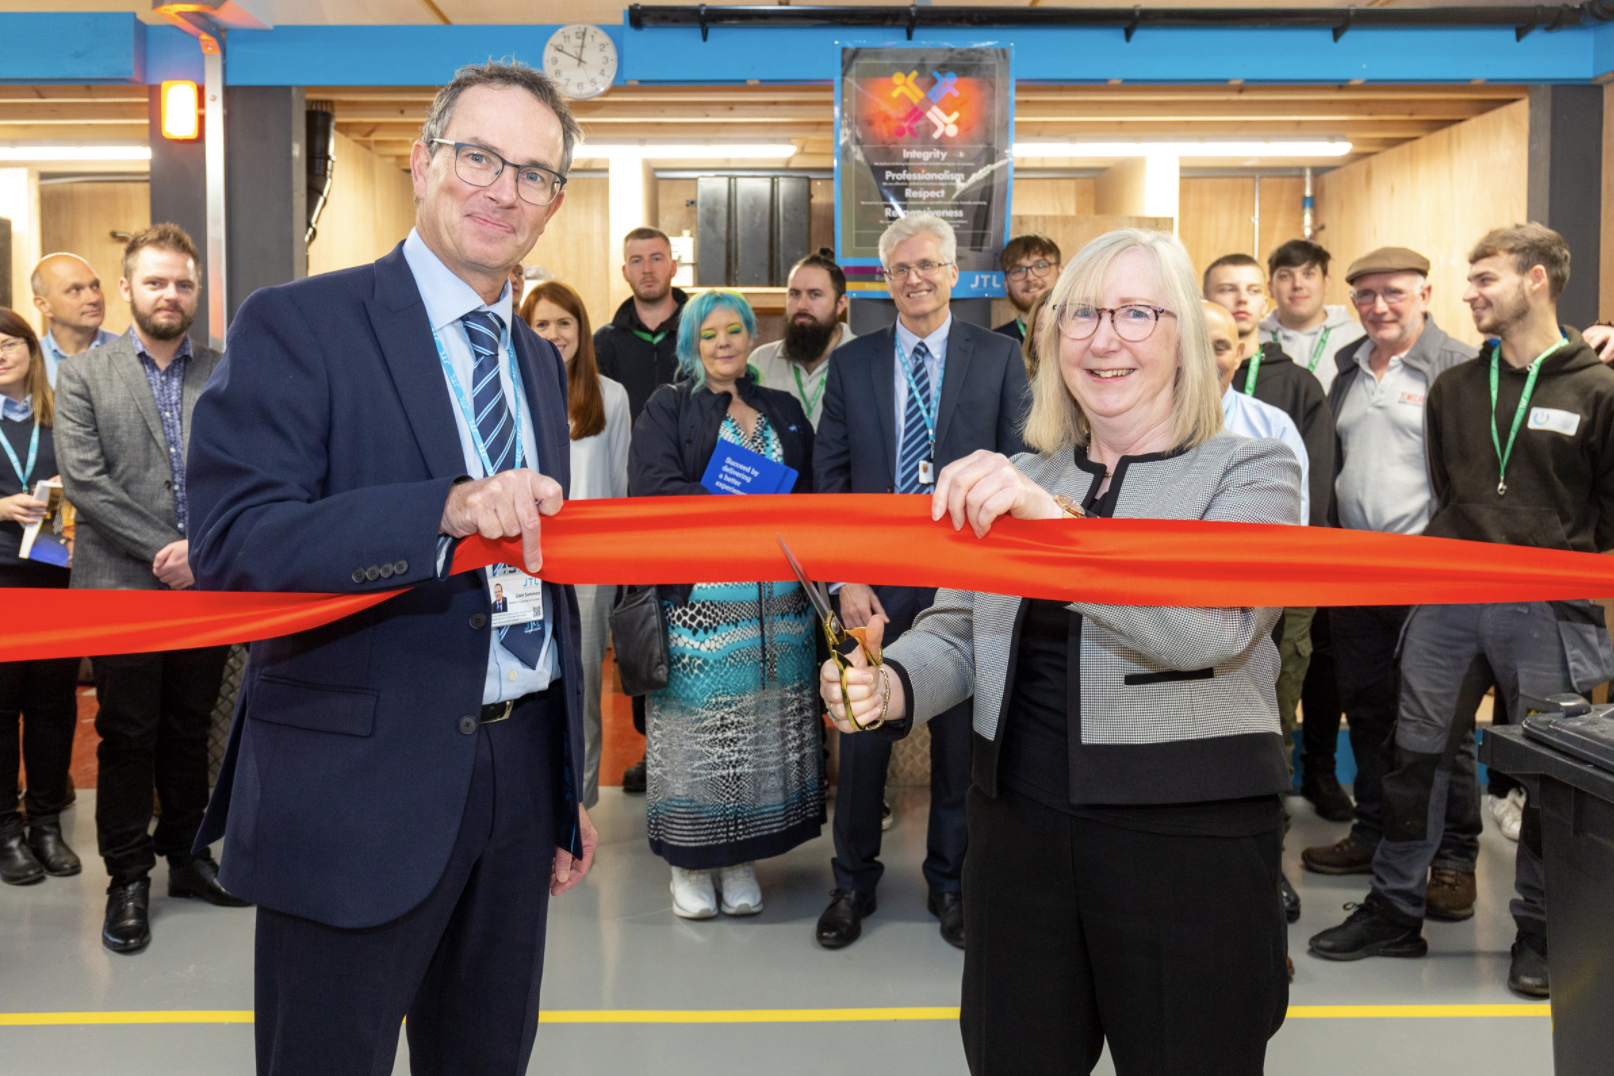 Local MP opens JTL’s latest training centre in Nottingham